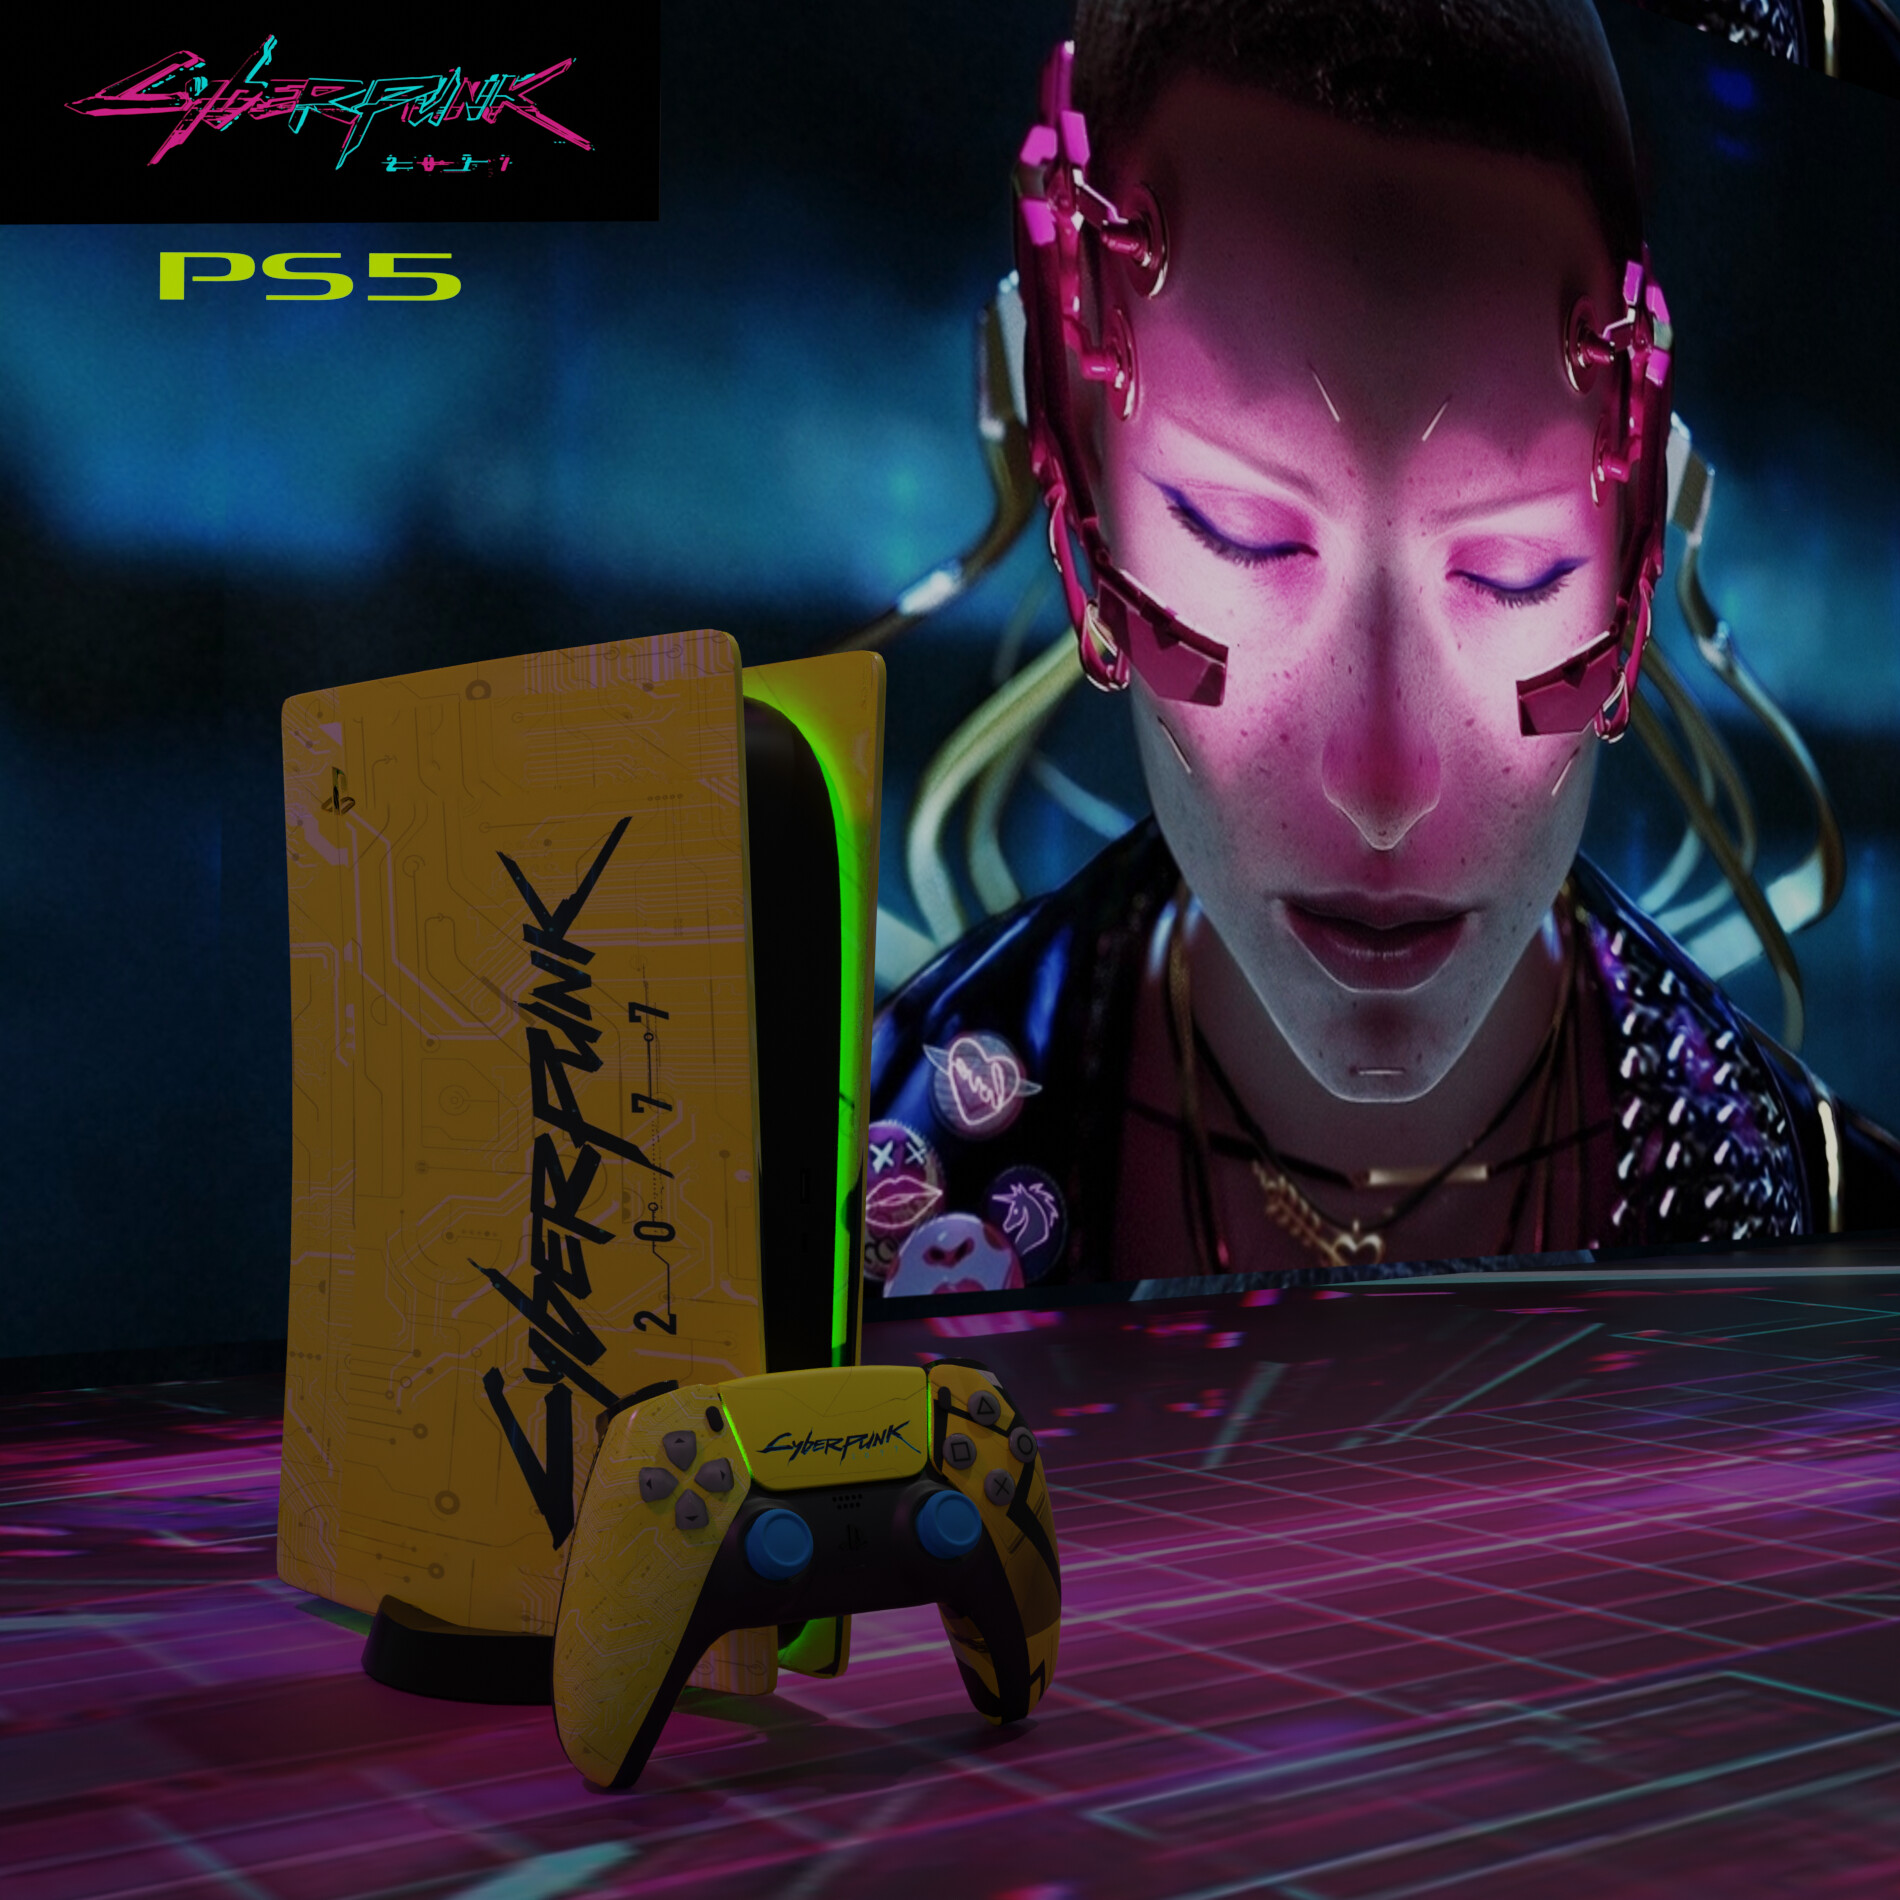 ArtStation - PS5 Cyberpunk 2077 Edition